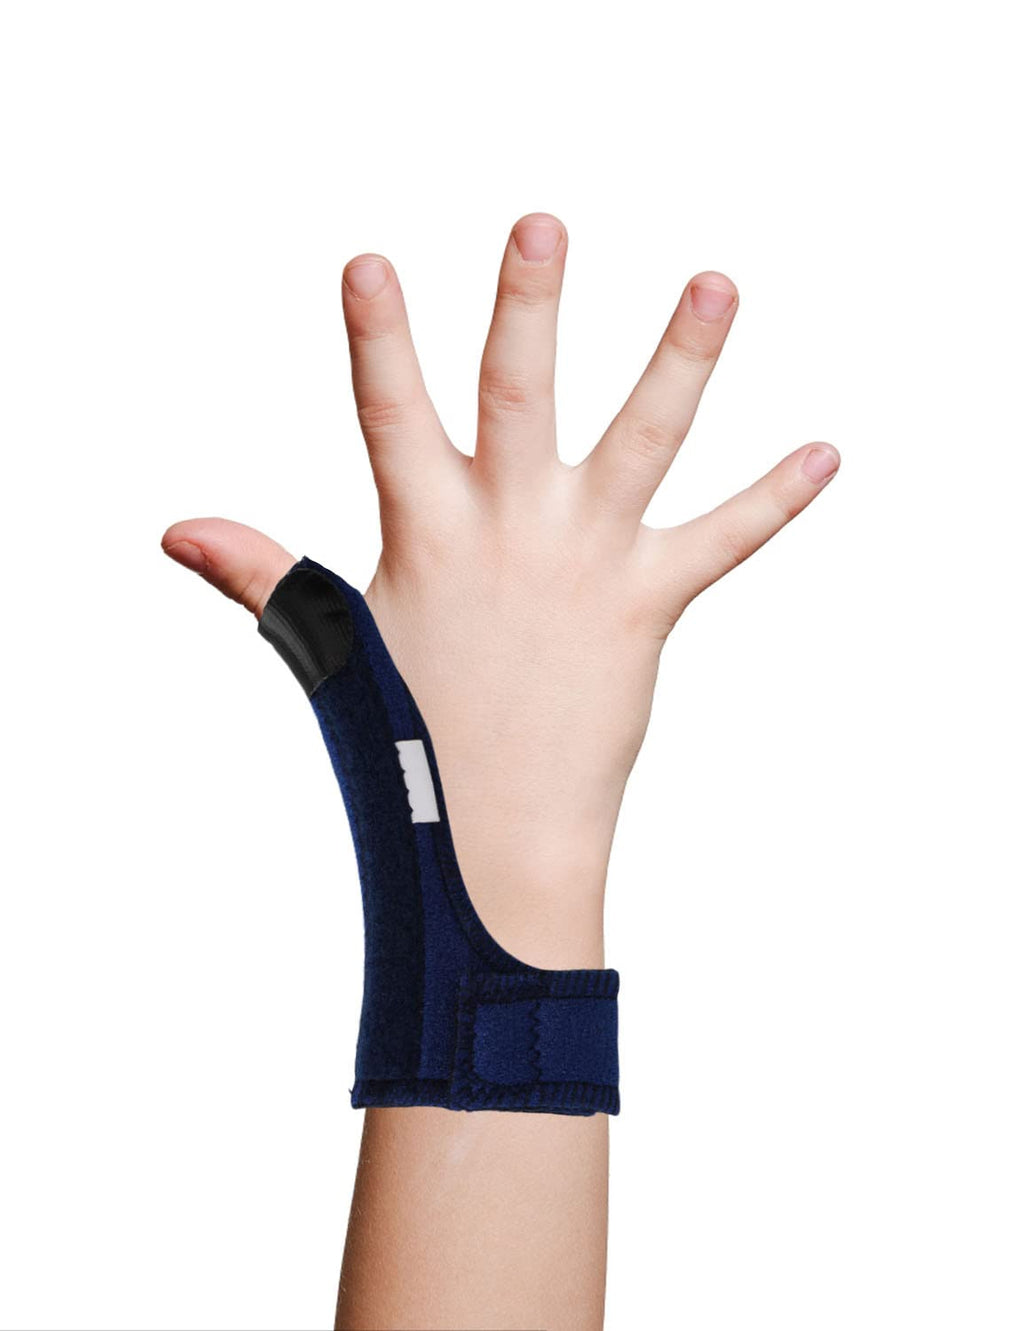 [Australia] - Weohoviy Thumb Brace, Trigger Finger Splint for Kids, Support Brace Straightening Broken Fingers, Injuries, Arthritis, Finger(XS), blue, X-Small 